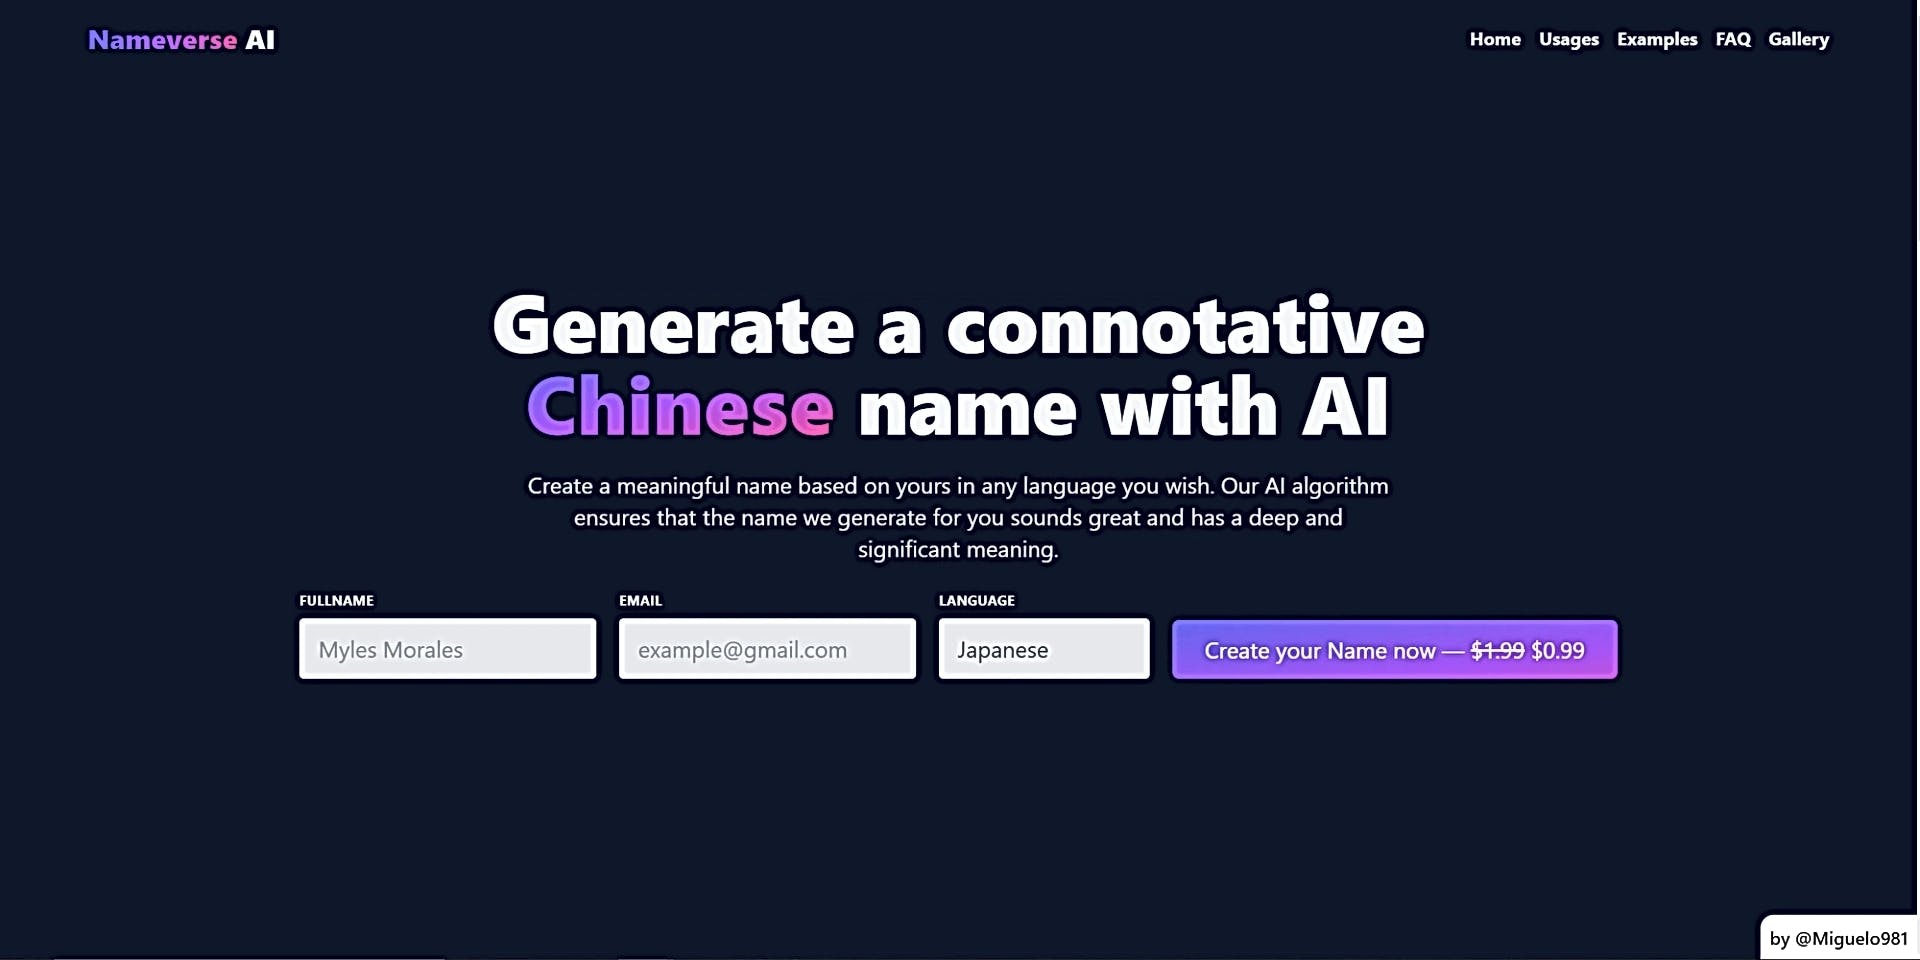 Nameverse AI featured